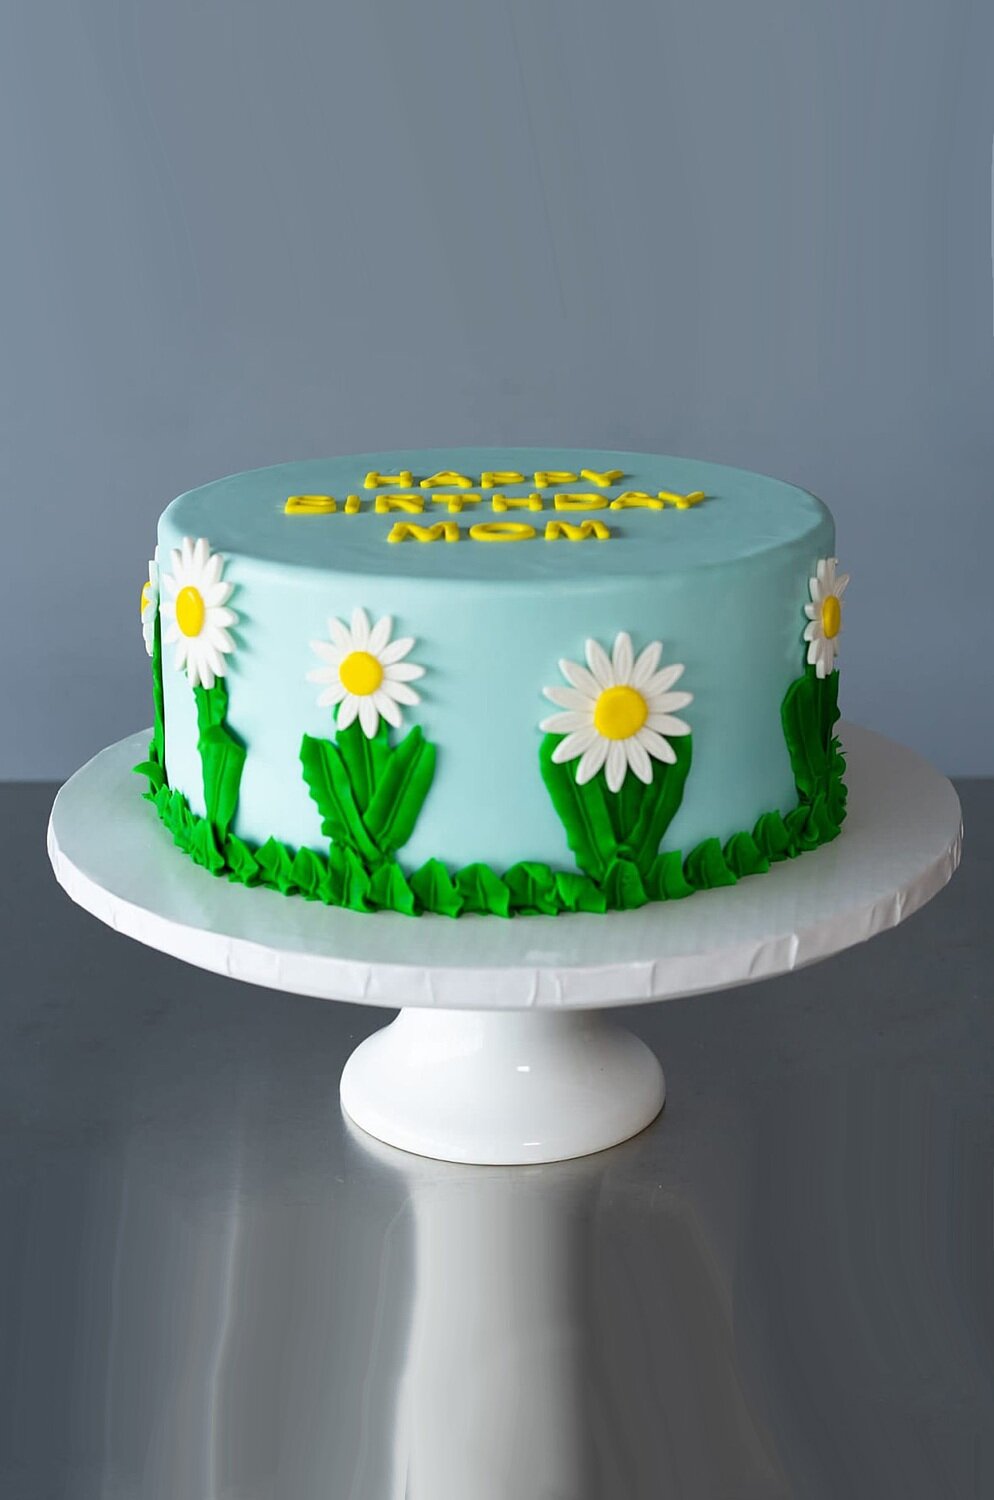 2020 daisy cakes net worth Kat Dennings